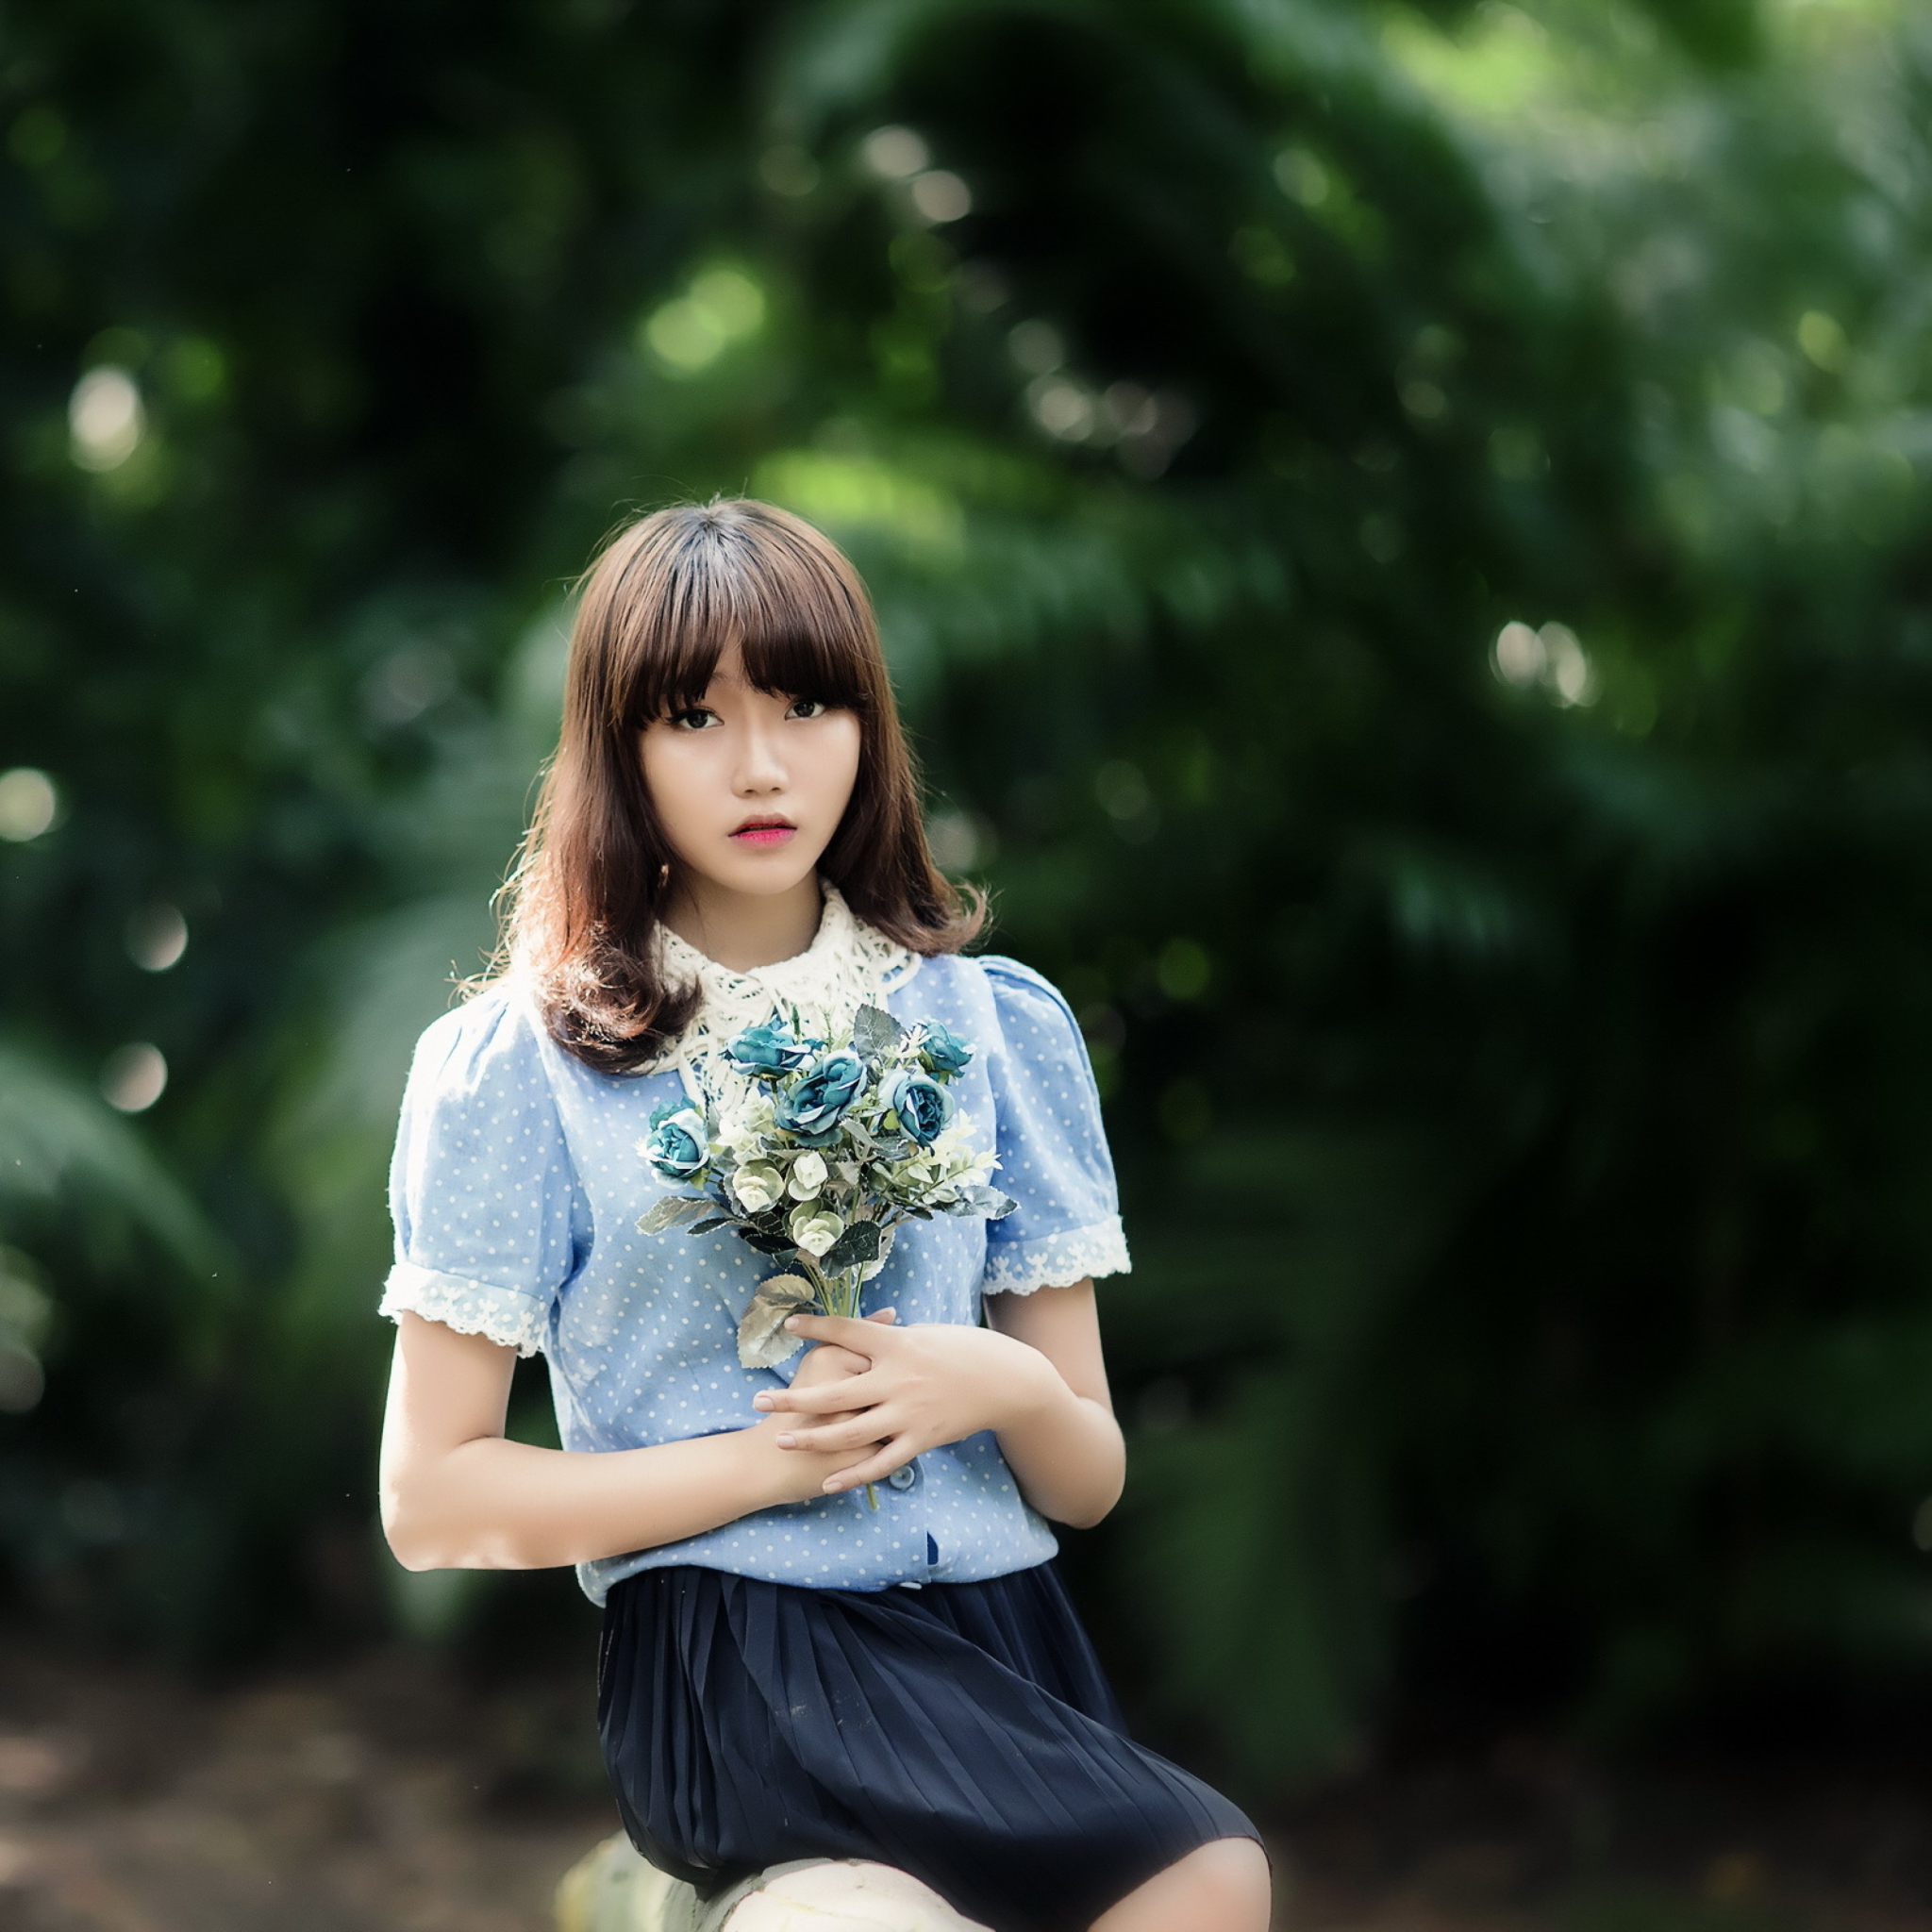 Cute Asian Model With Flower Bouquet wallpaper 2048x2048